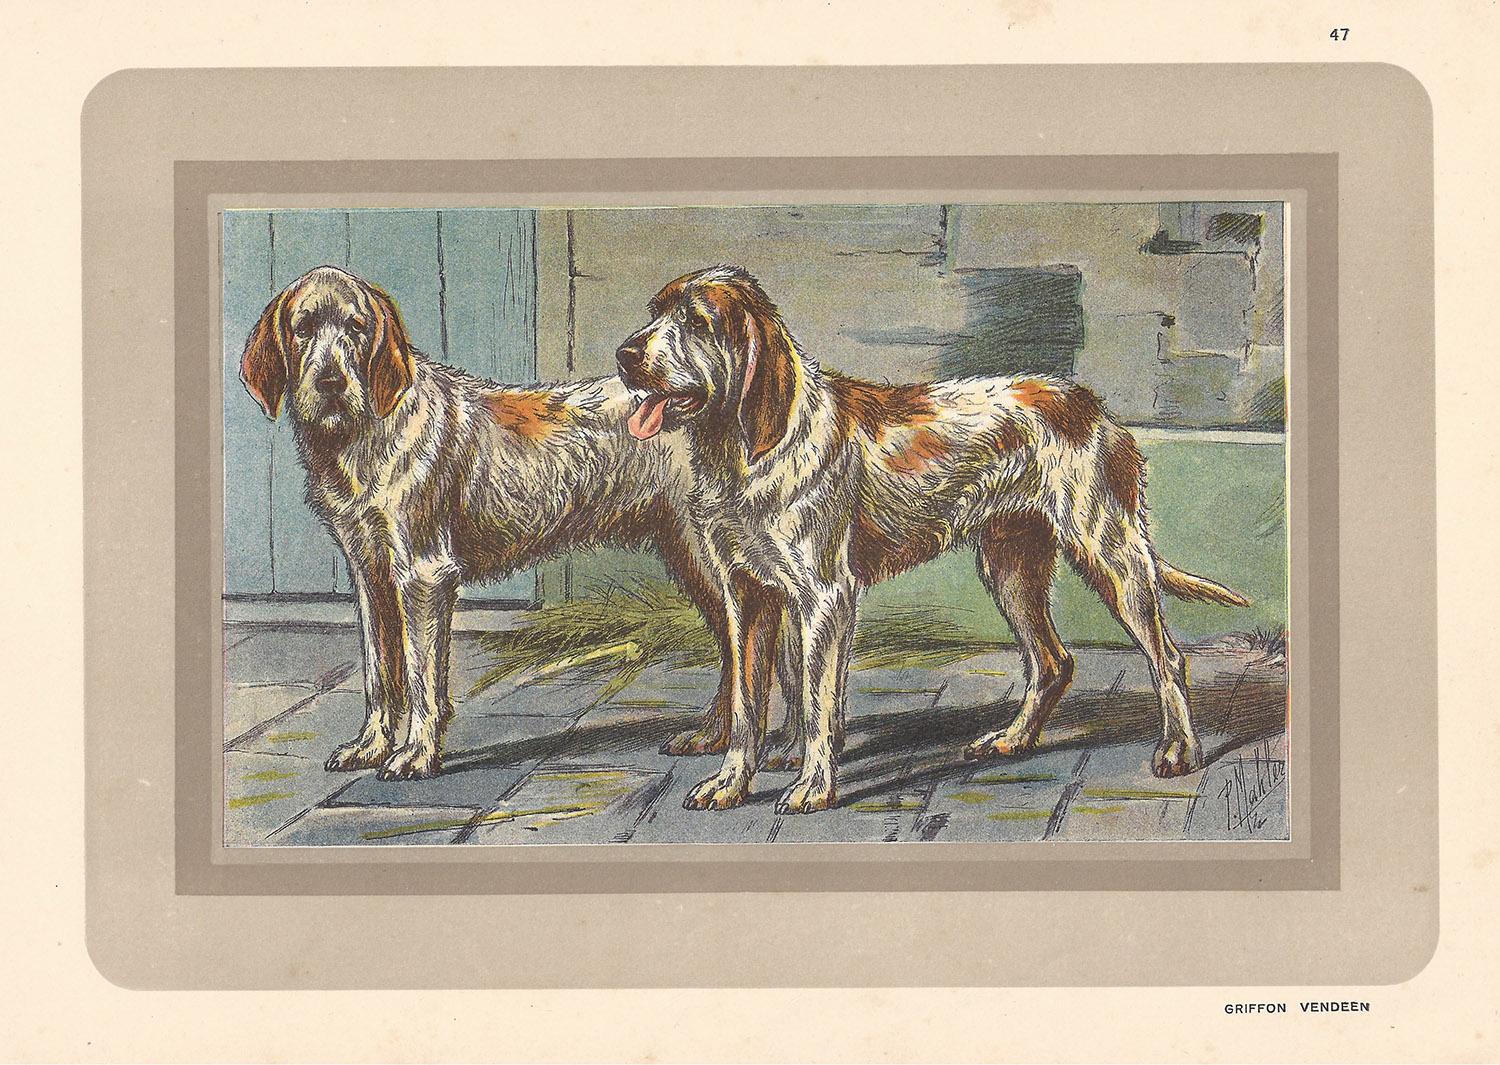 Griffon Vendeens, French hound, dog chromolithograph, 1930s